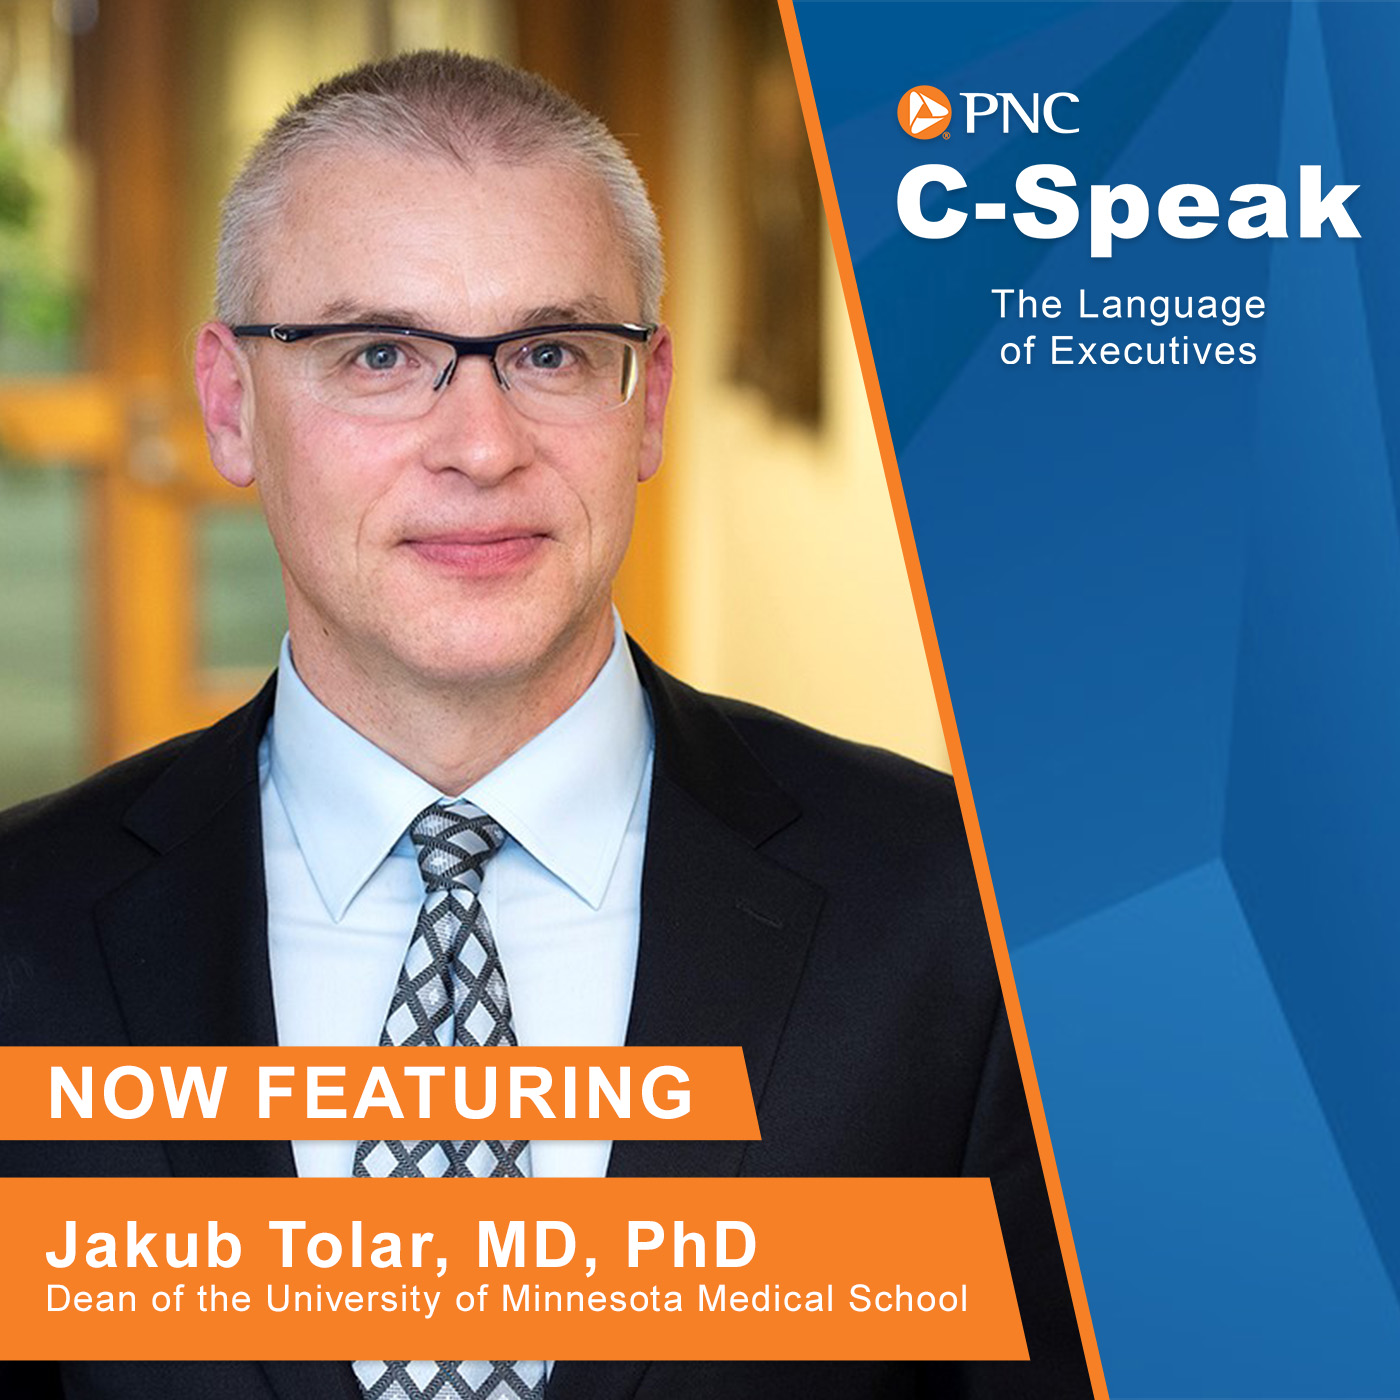 Dr. Jakub Tolar, MD, PhD - Dean of the University of Minnesota Medical School